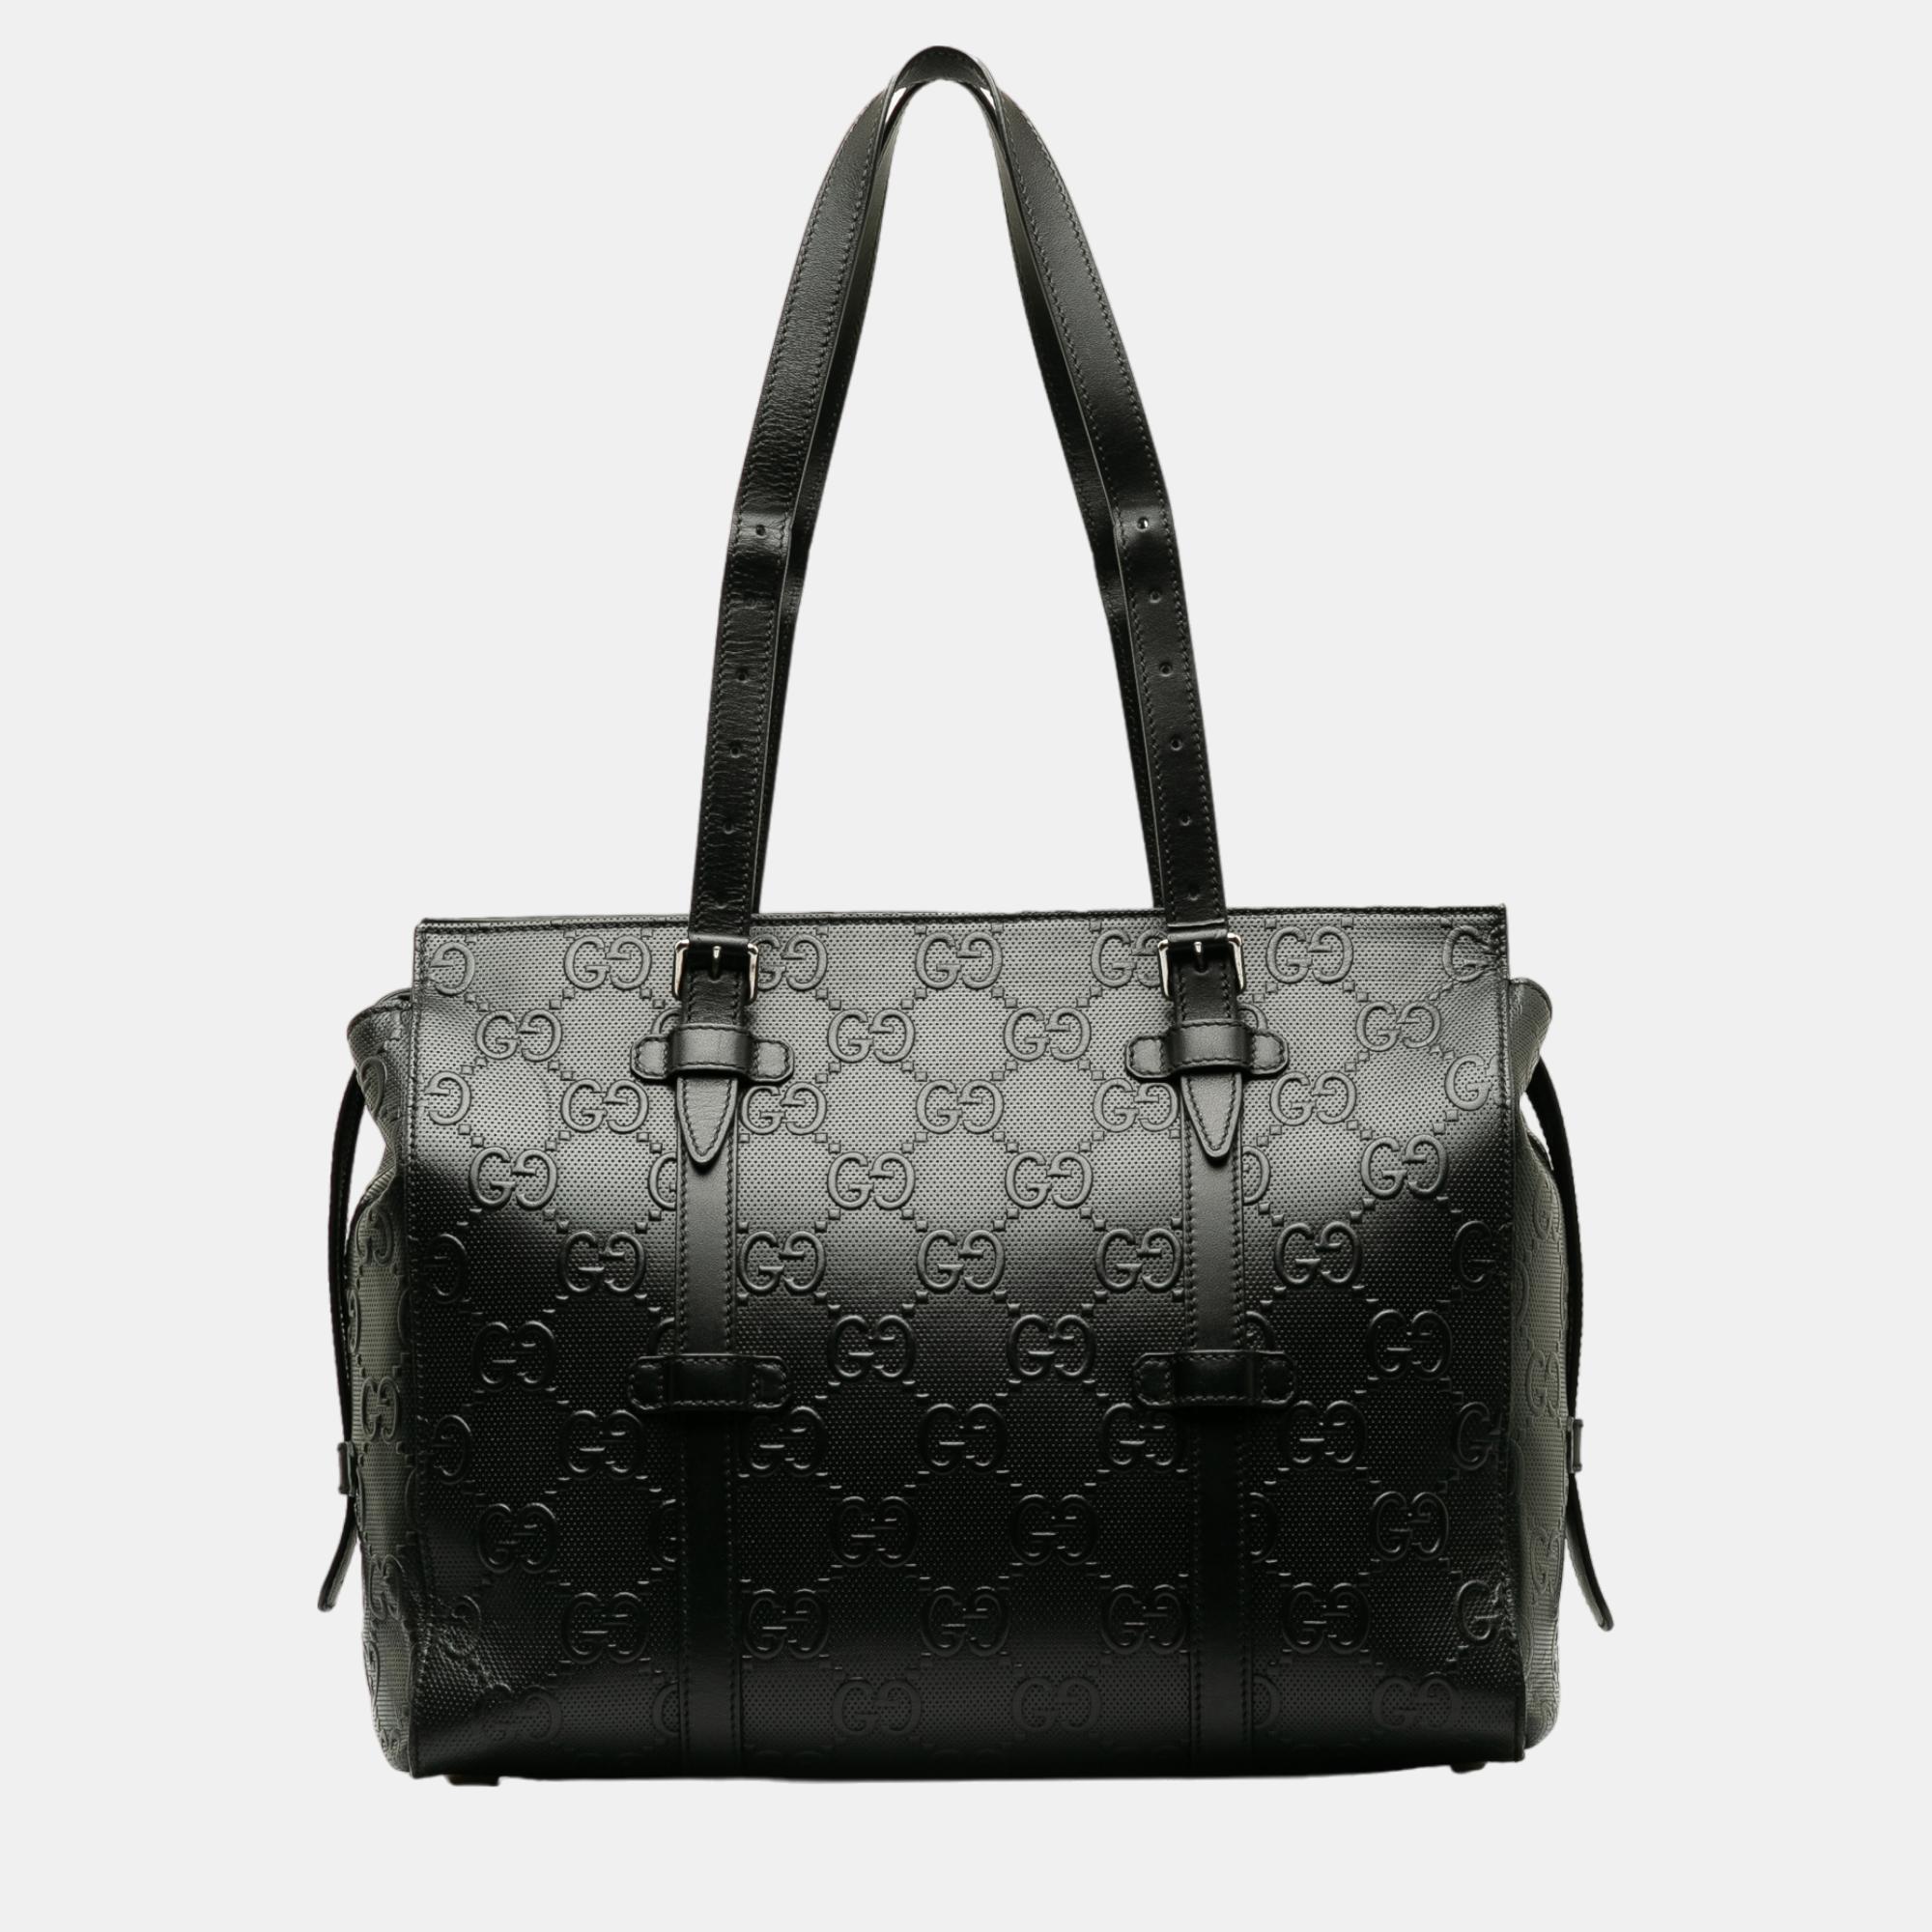 Gucci black gg embossed tote bag